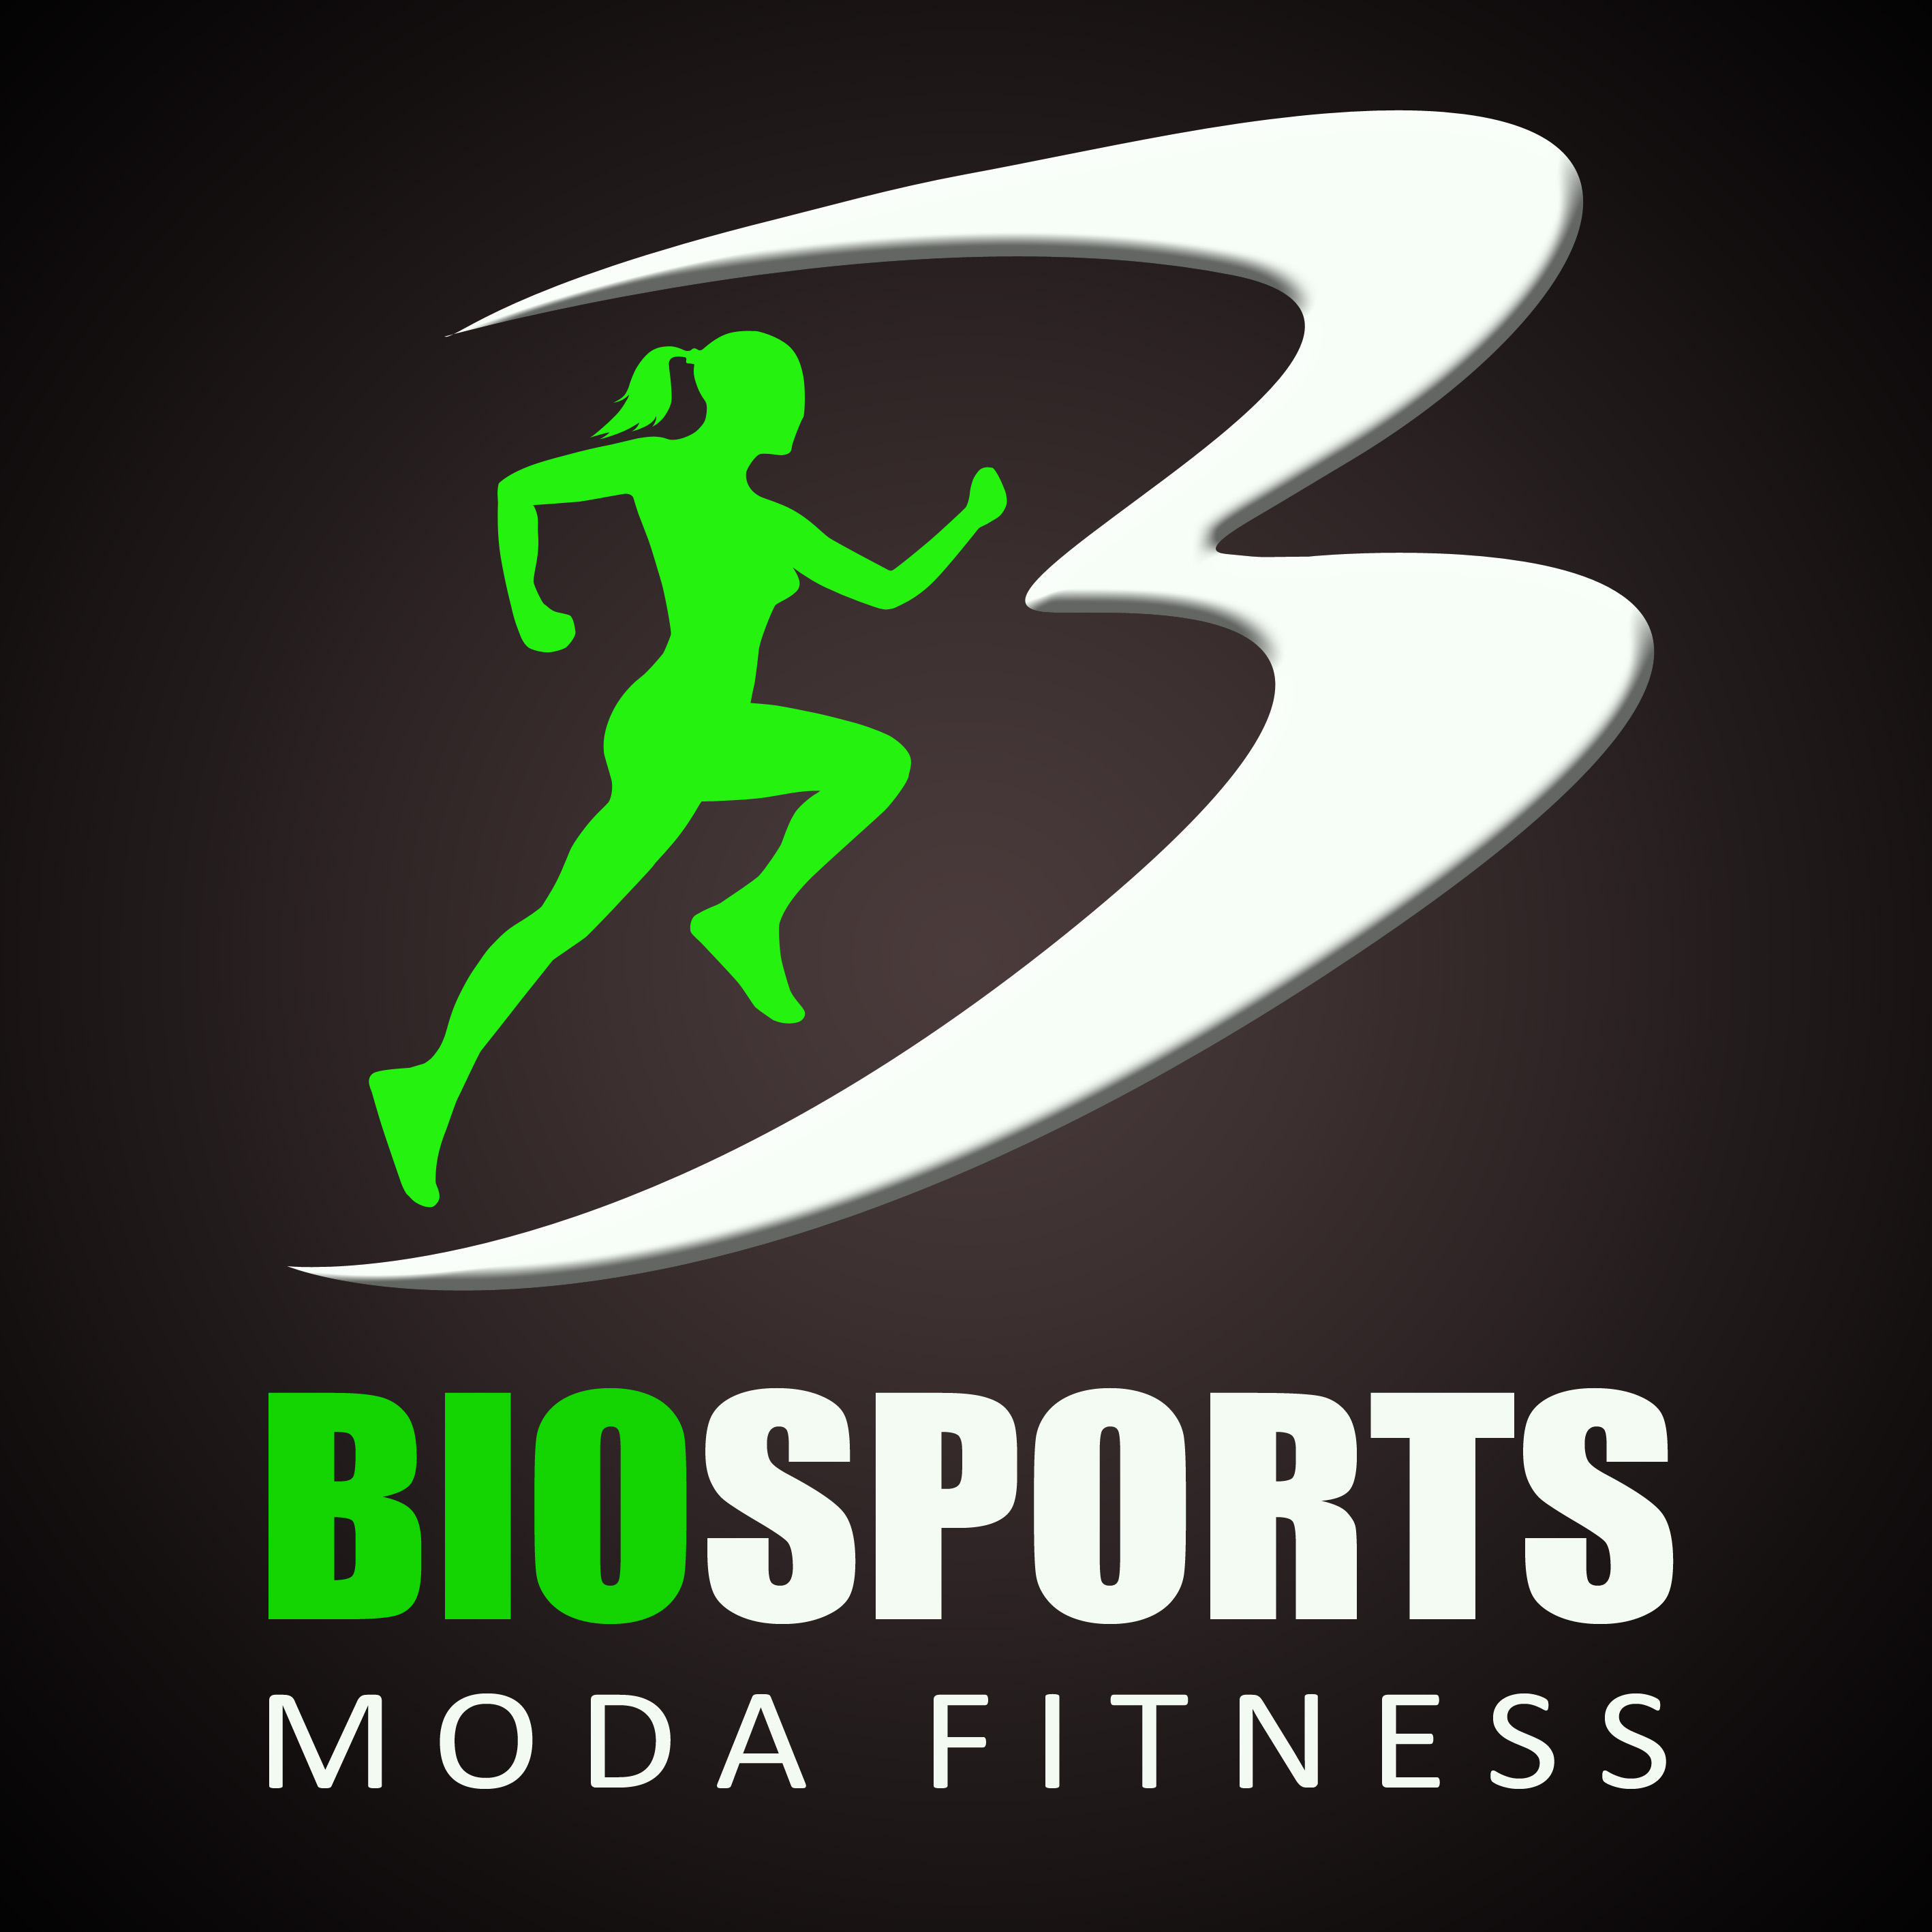 BIOSPORTS MODA FITNESS - Moda Fitness - Mogi Guaçu, SP